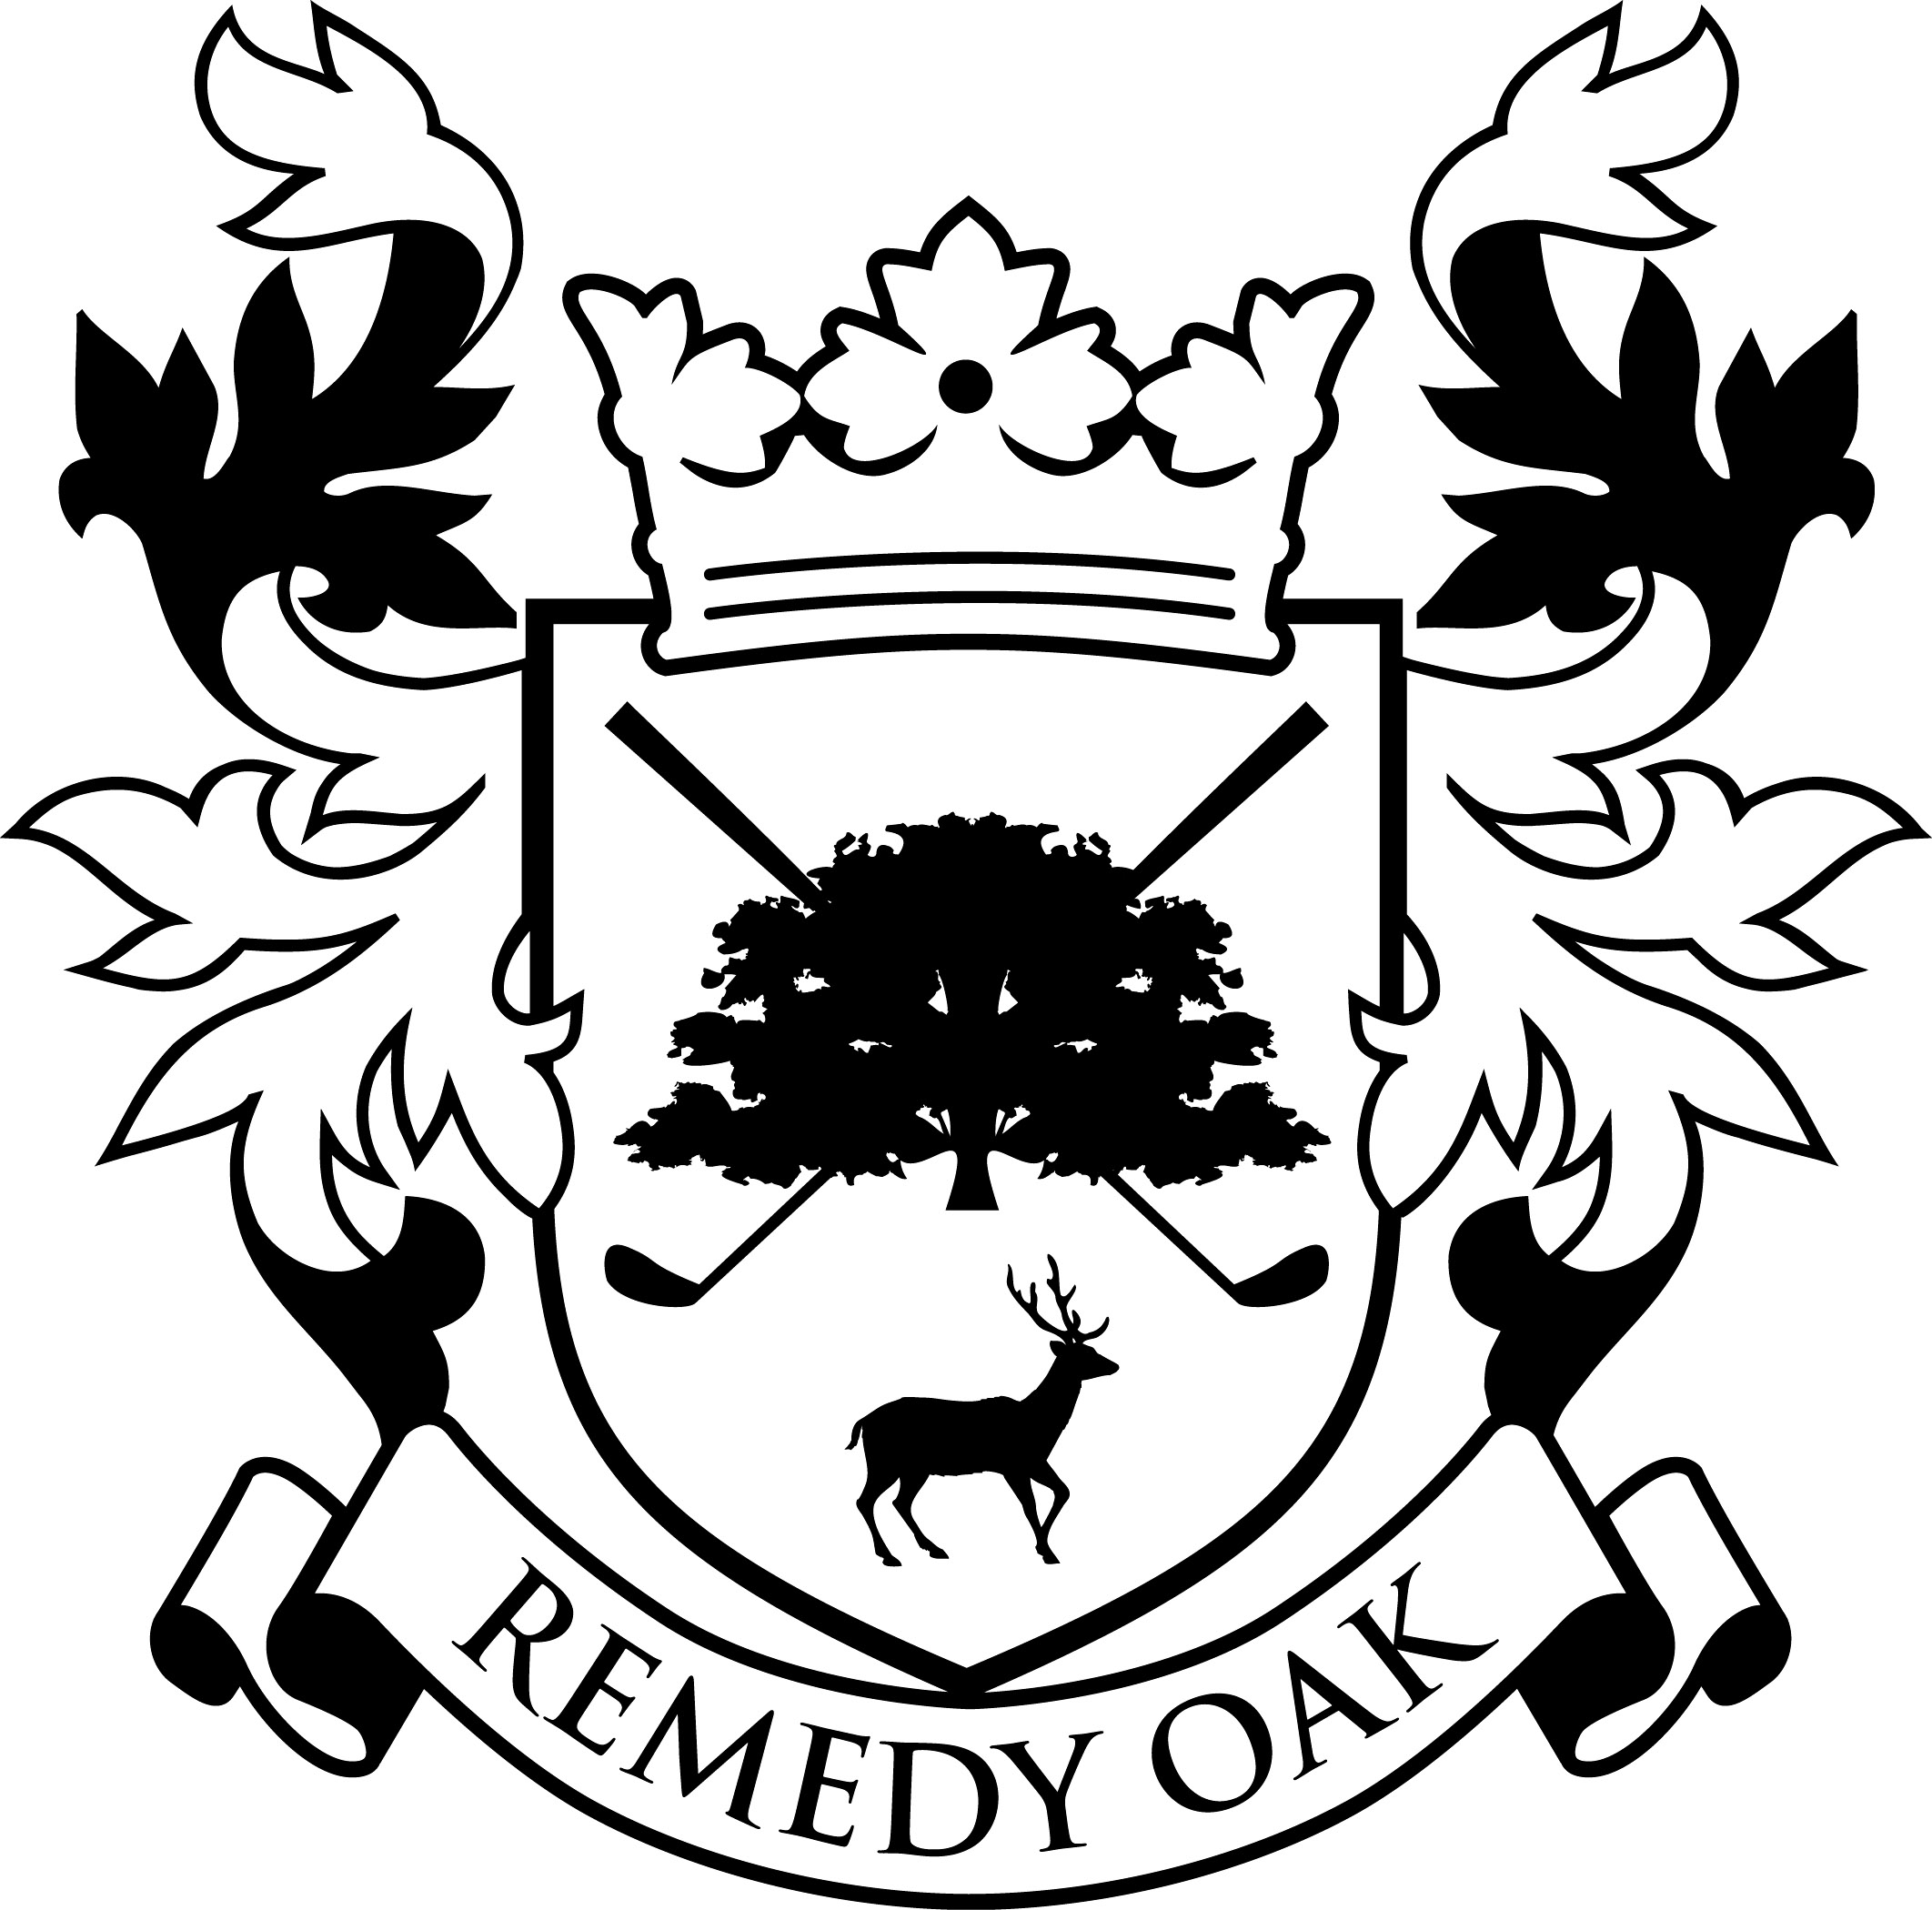 remedy-oak